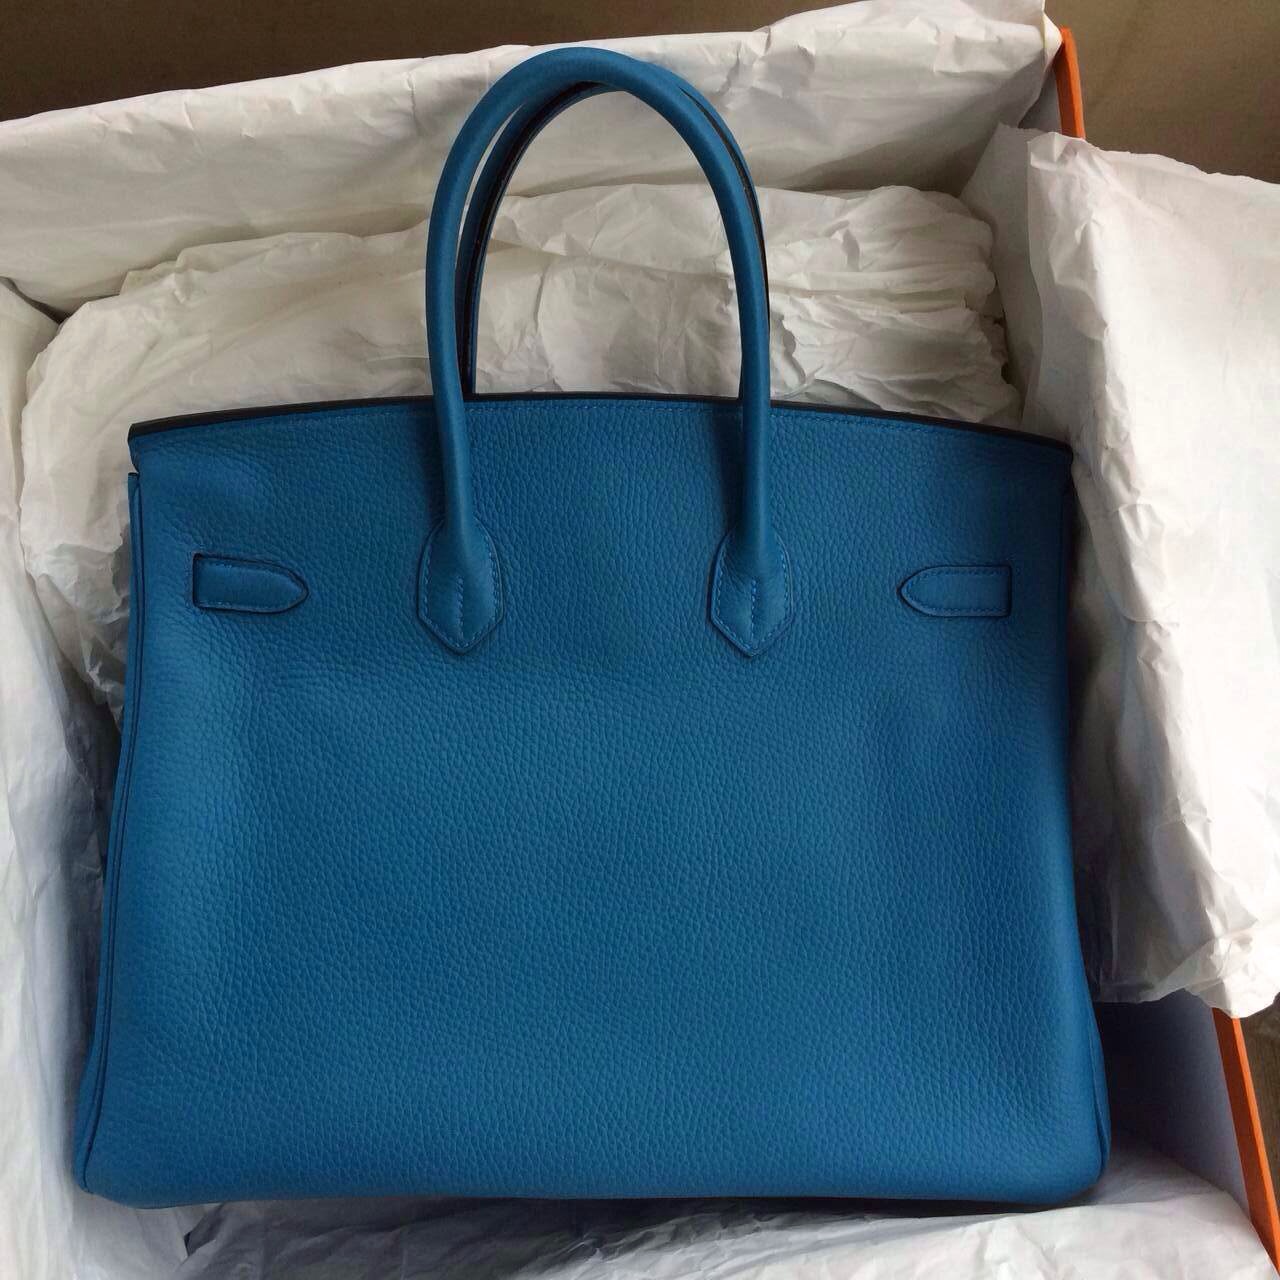 hermes birkin bag 35cm turquoise togo gold hardware, how much birkin bag